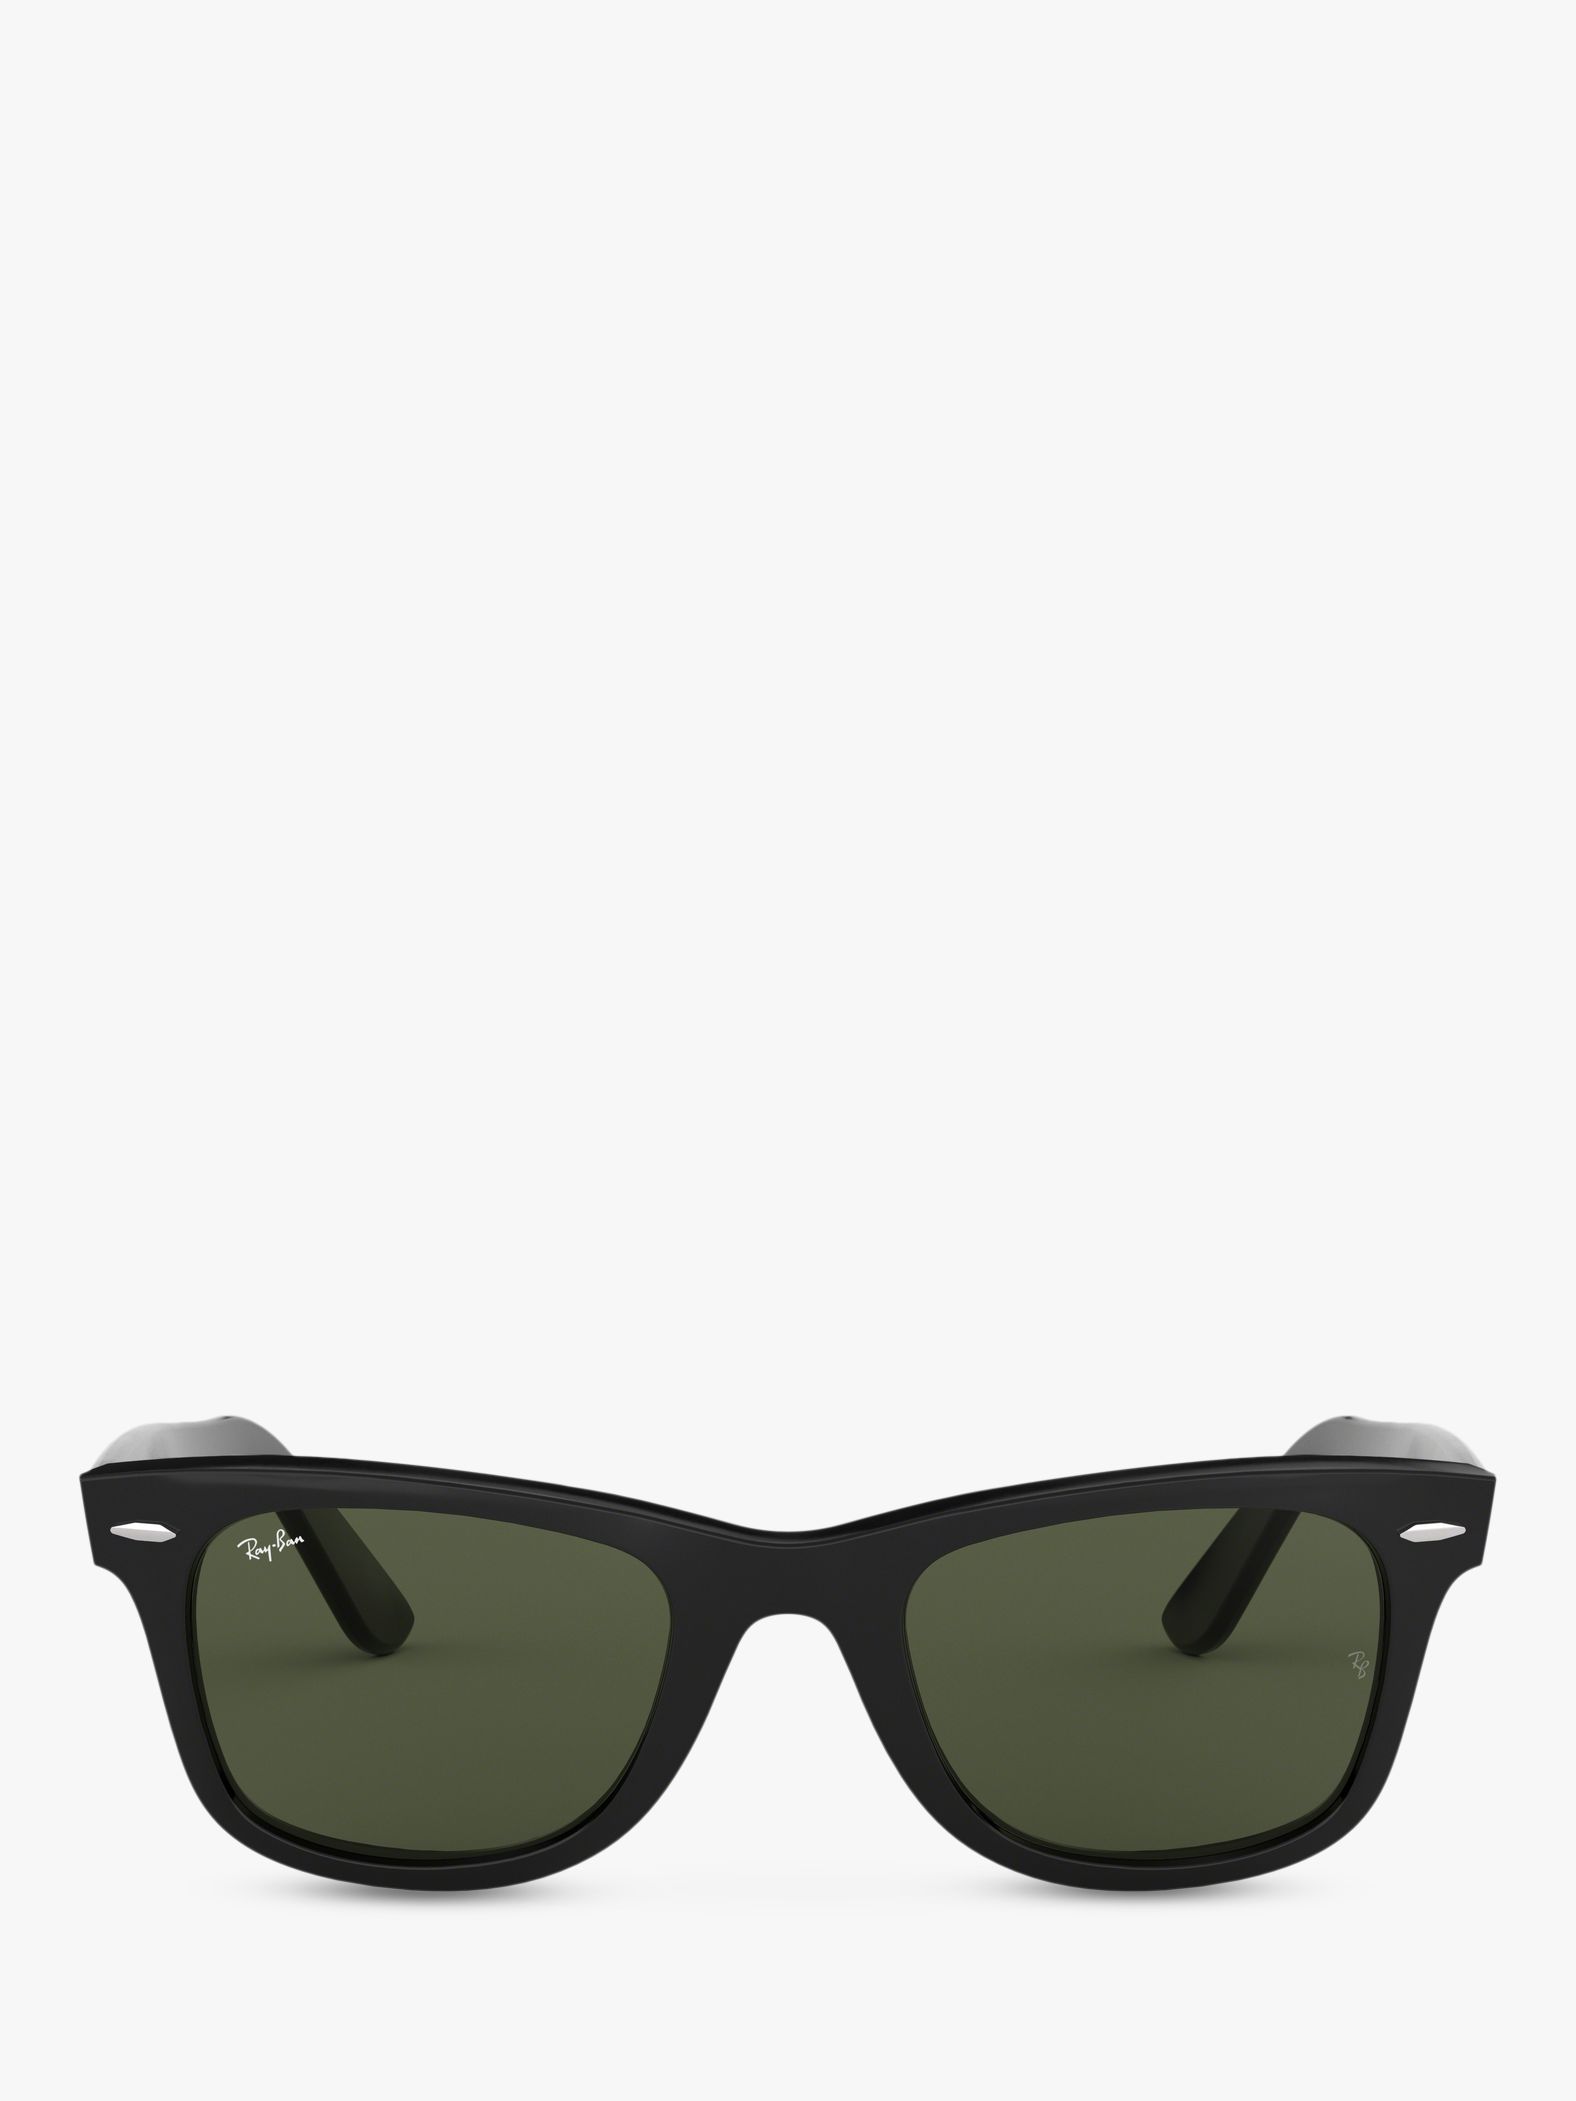 Buy Ray-Ban RB2140 Unisex New Wayfarer Sunglasses Online at johnlewis.com